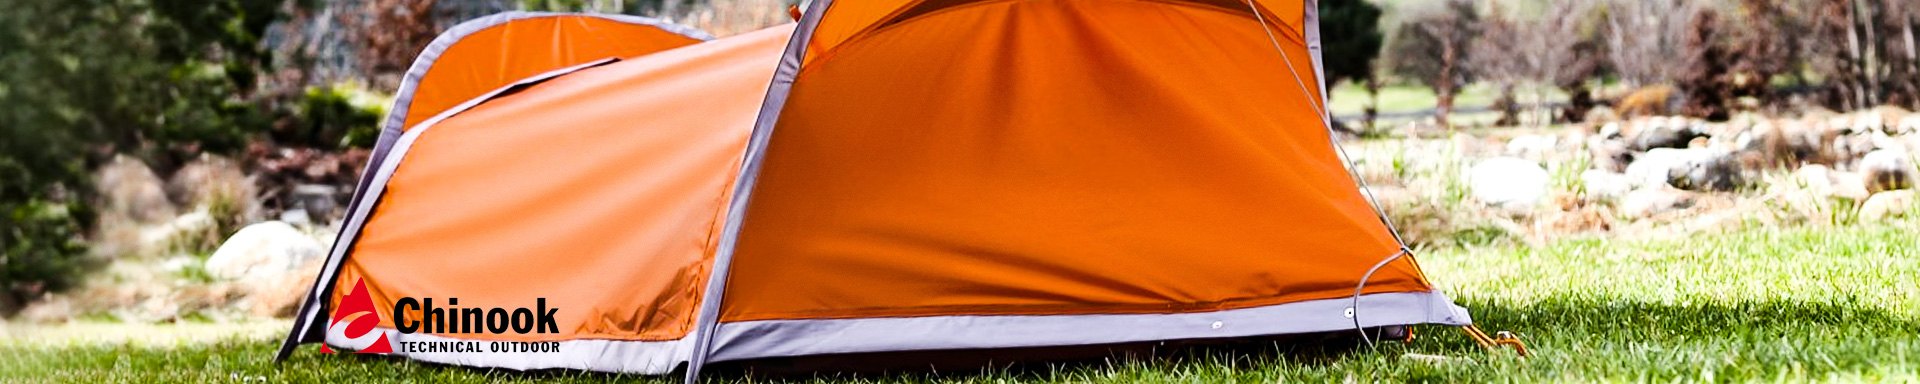 Chinook Camping Sleeping Bags & Pads